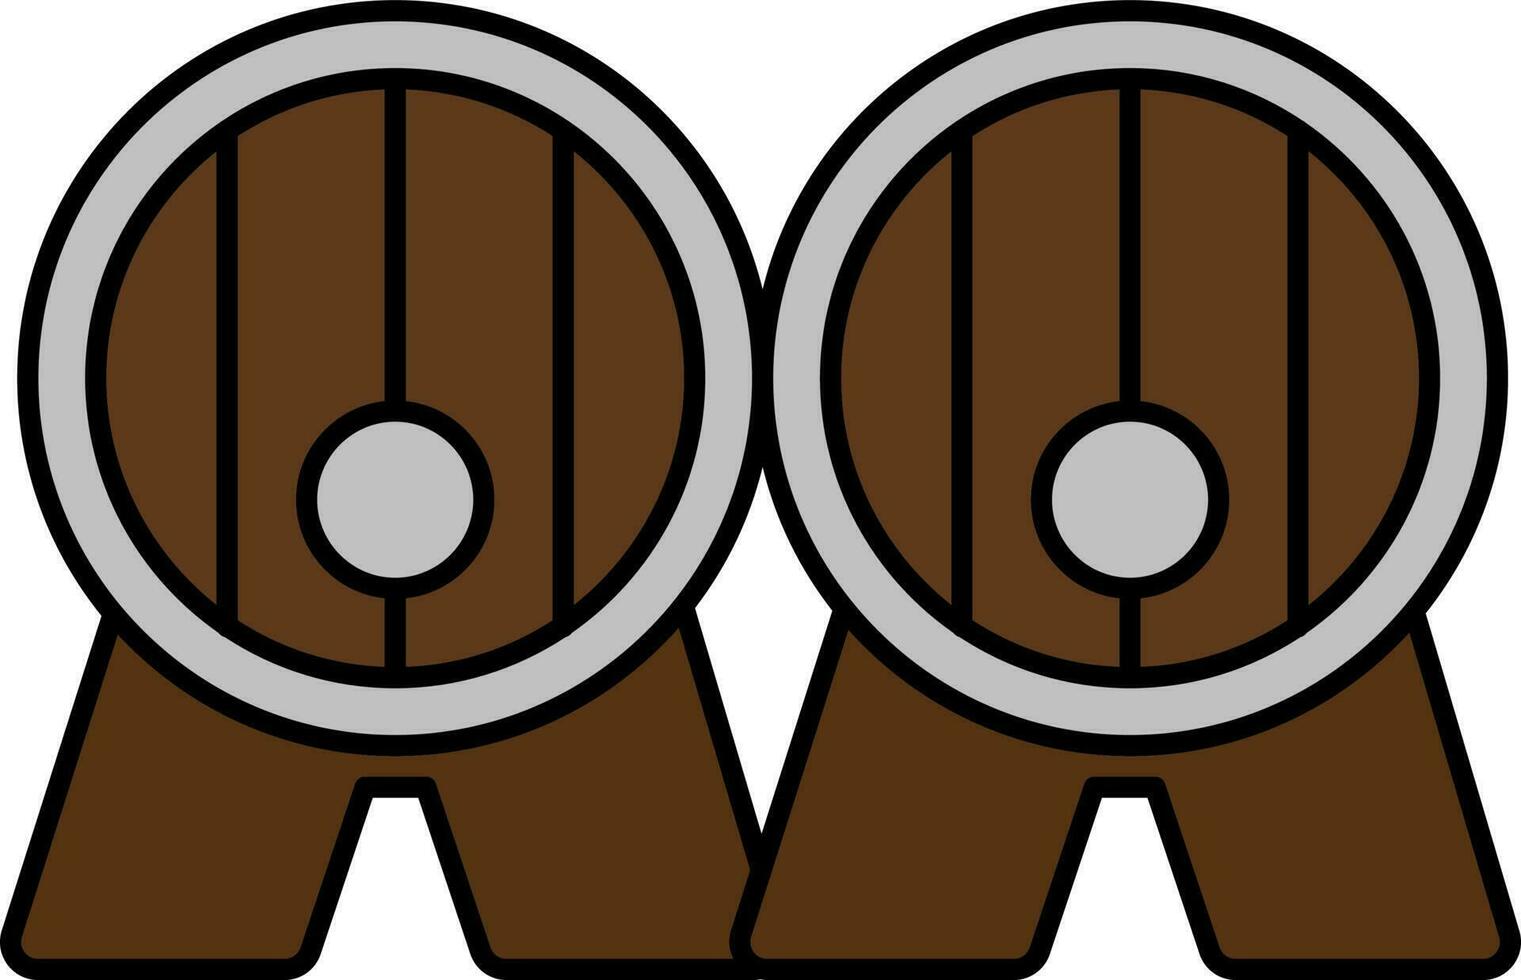 Flat Beer Cage Or Barrel Icon In Brow Color. vector